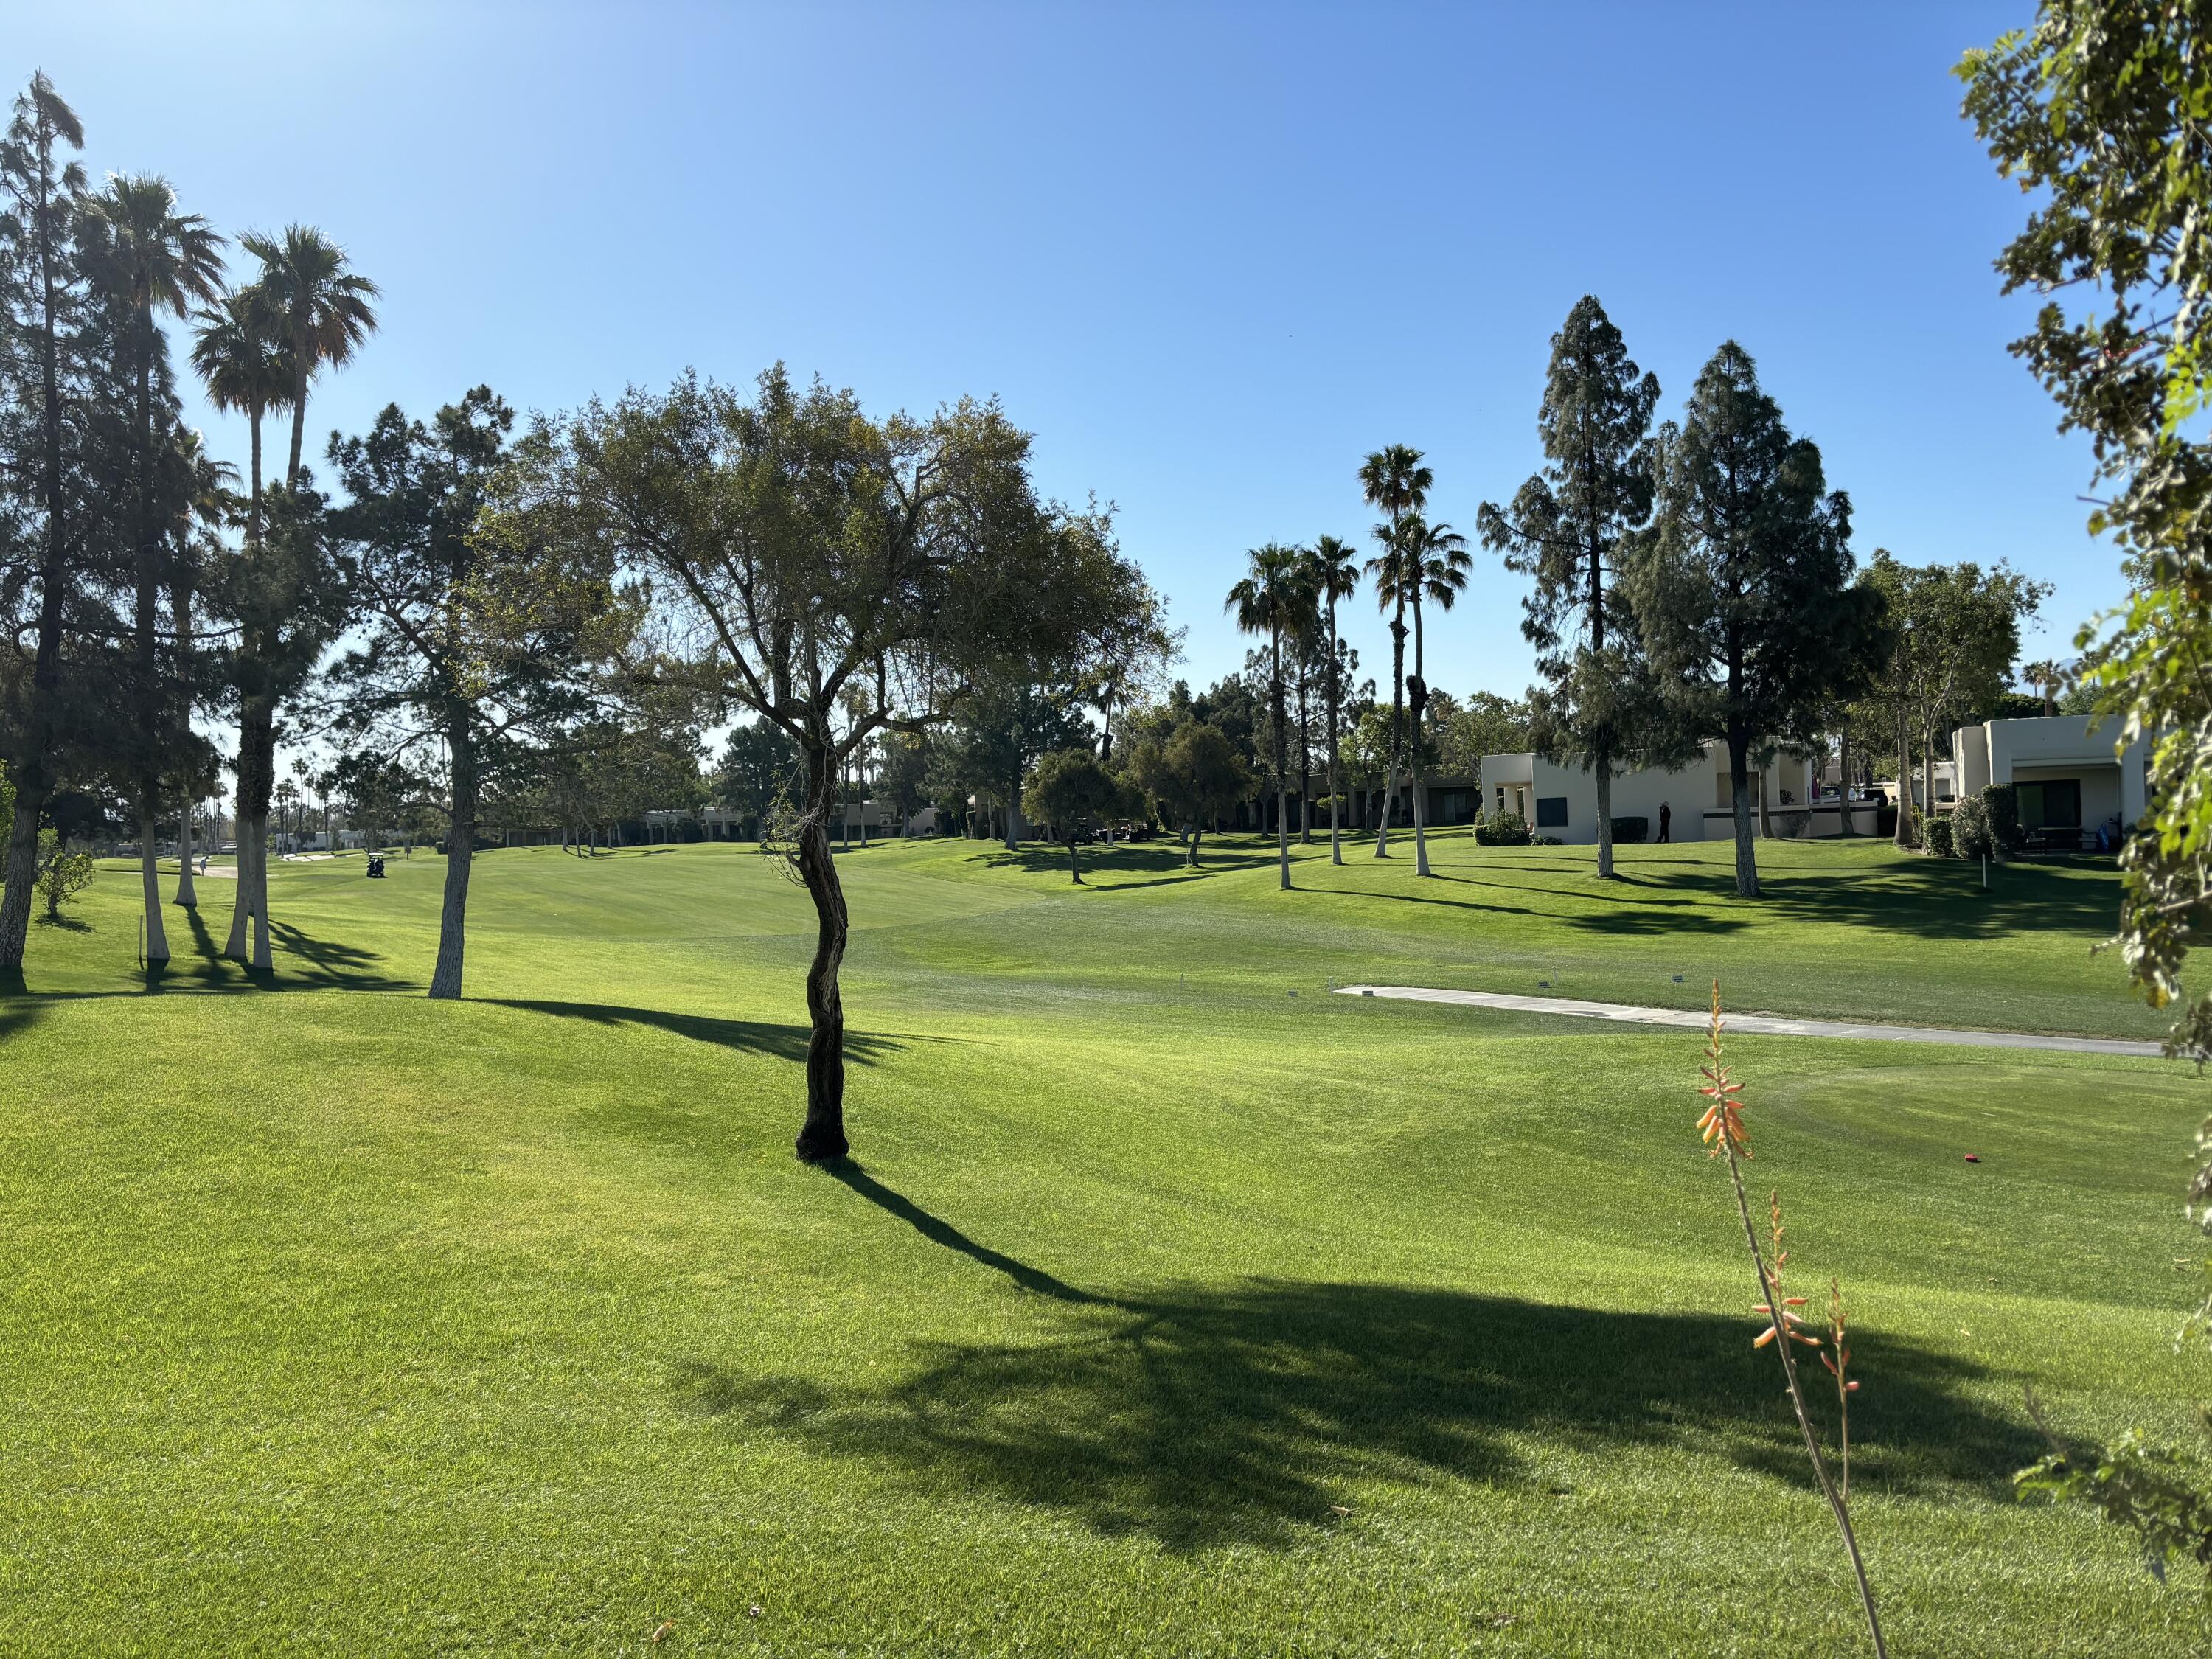 a view of a park